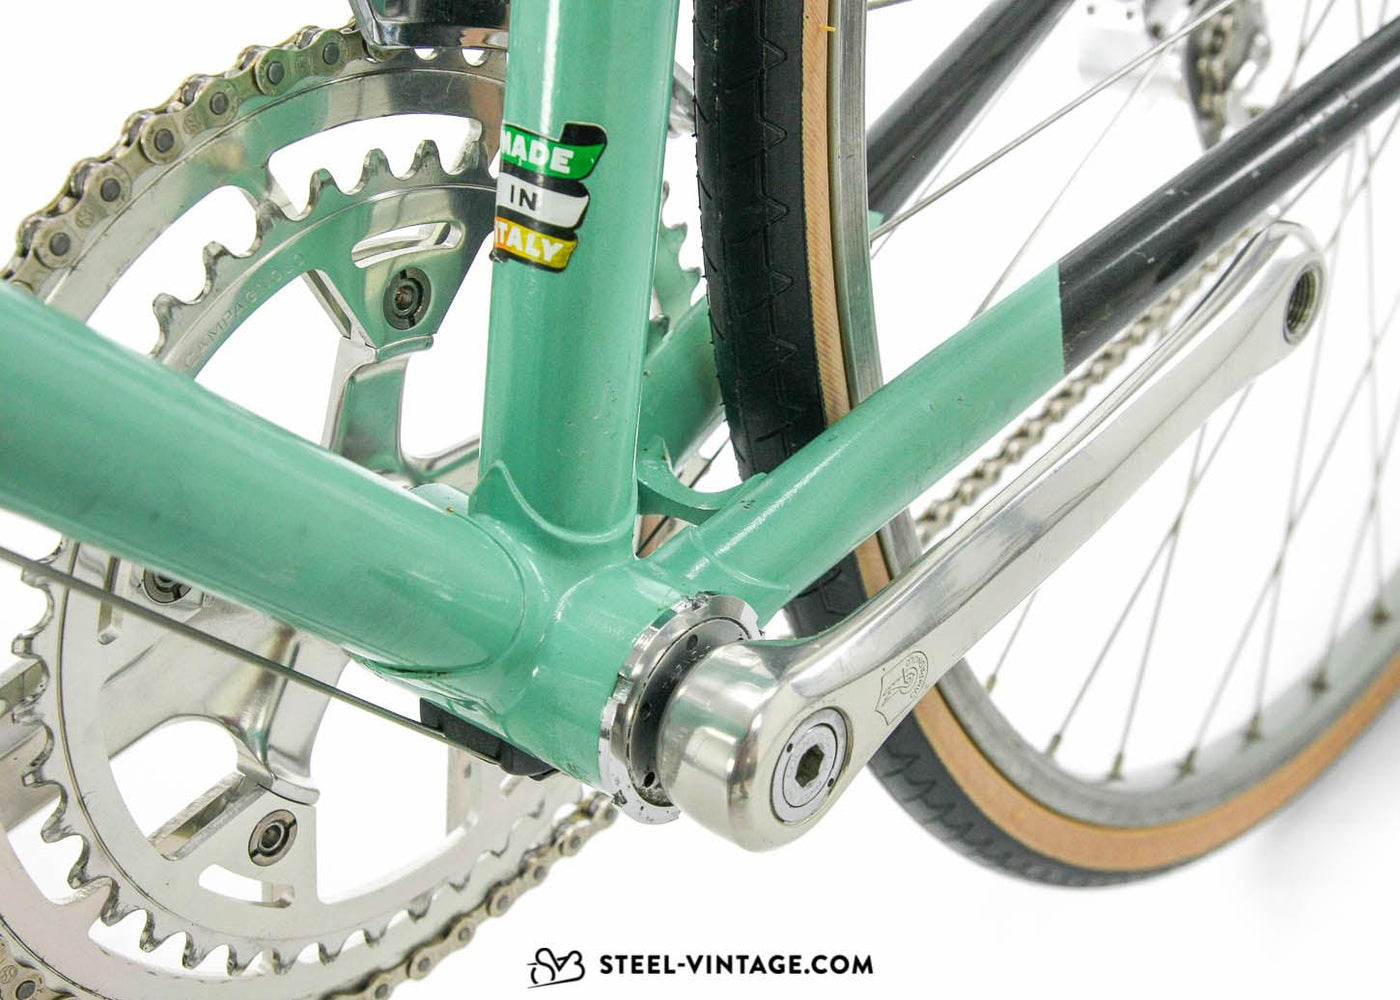 Bianchi Rekord 915 'Victory' Classic Road Bike 1980s - Steel Vintage Bikes